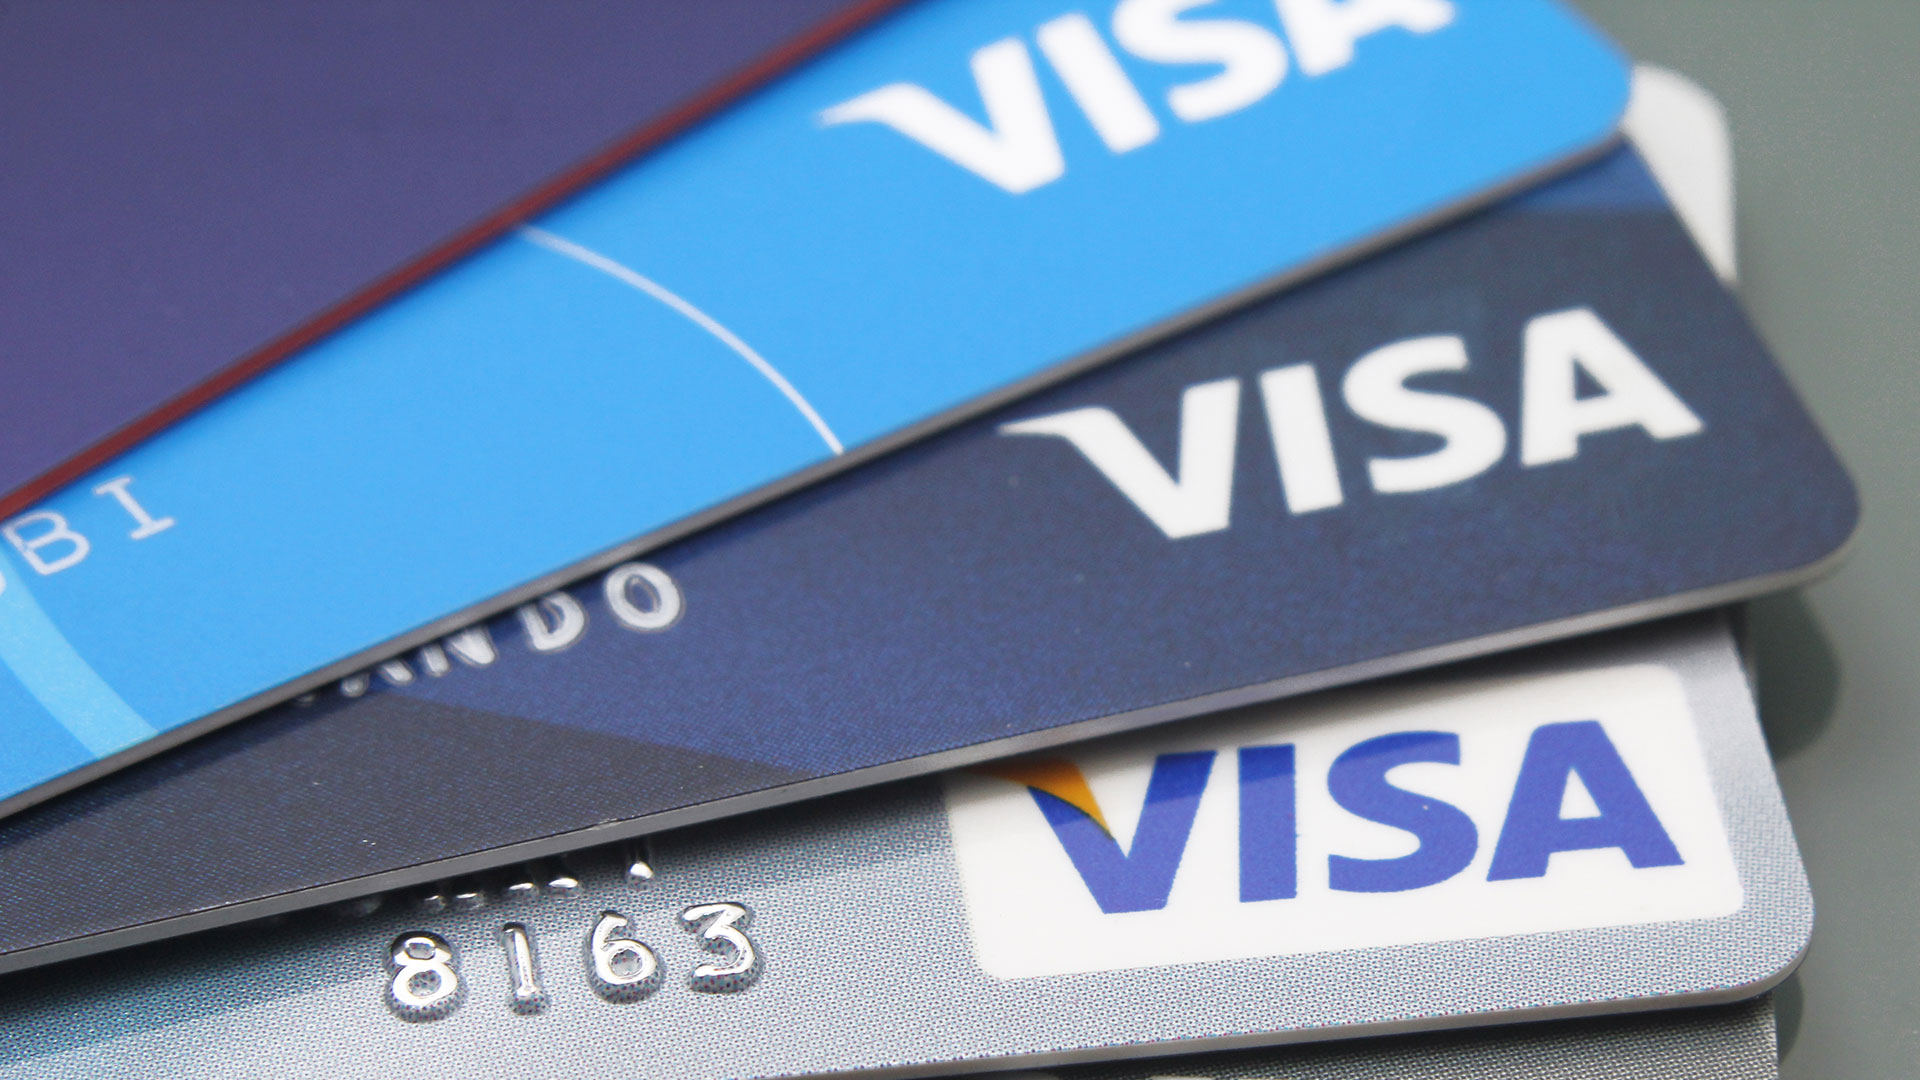 Reiselust beflügelt Visa – Aktie kommt an der Wall Street auf Touren  (Foto: Shutterstock)